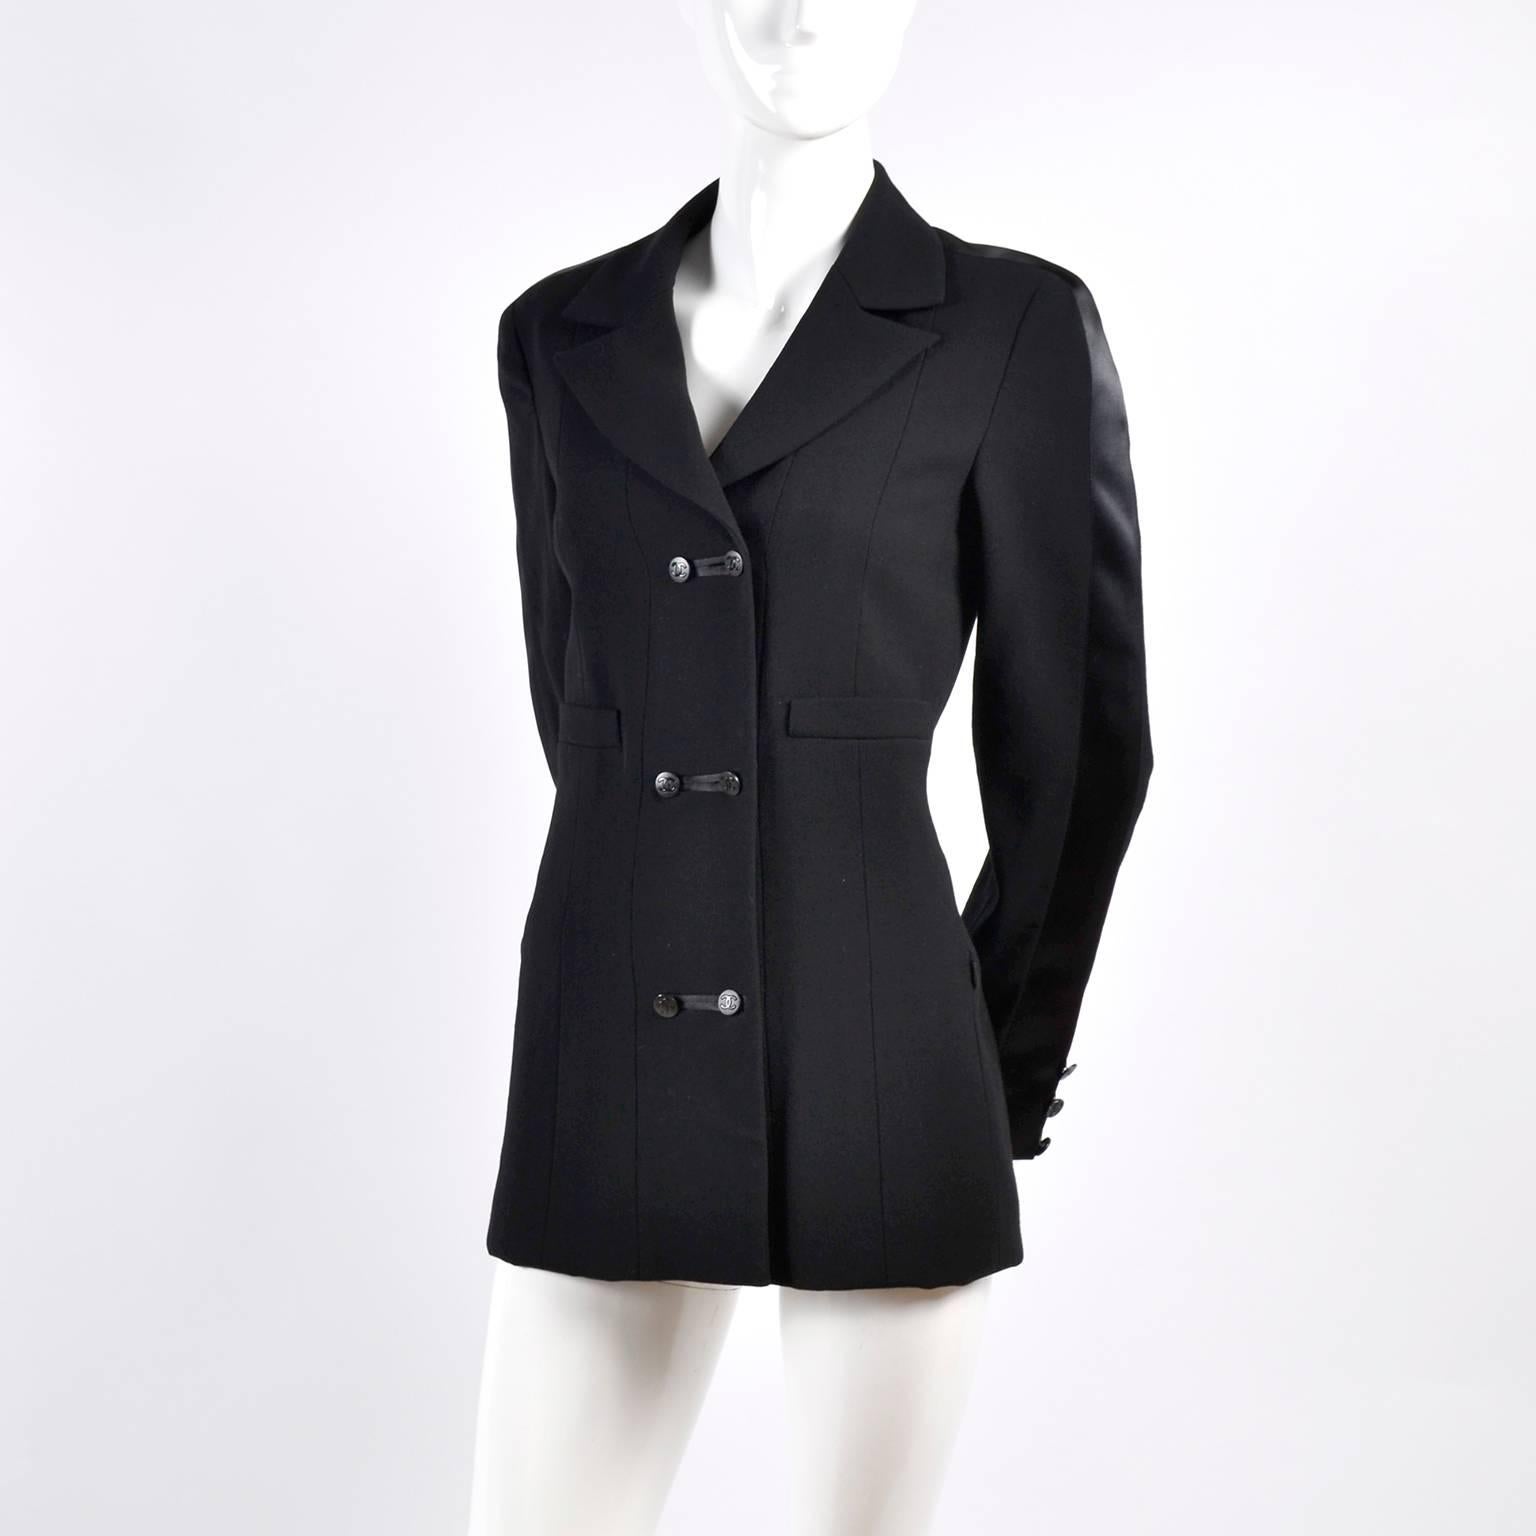 2003 Chanel Jacket Black Wool Blazer W Satin Stripes in Size 38 12